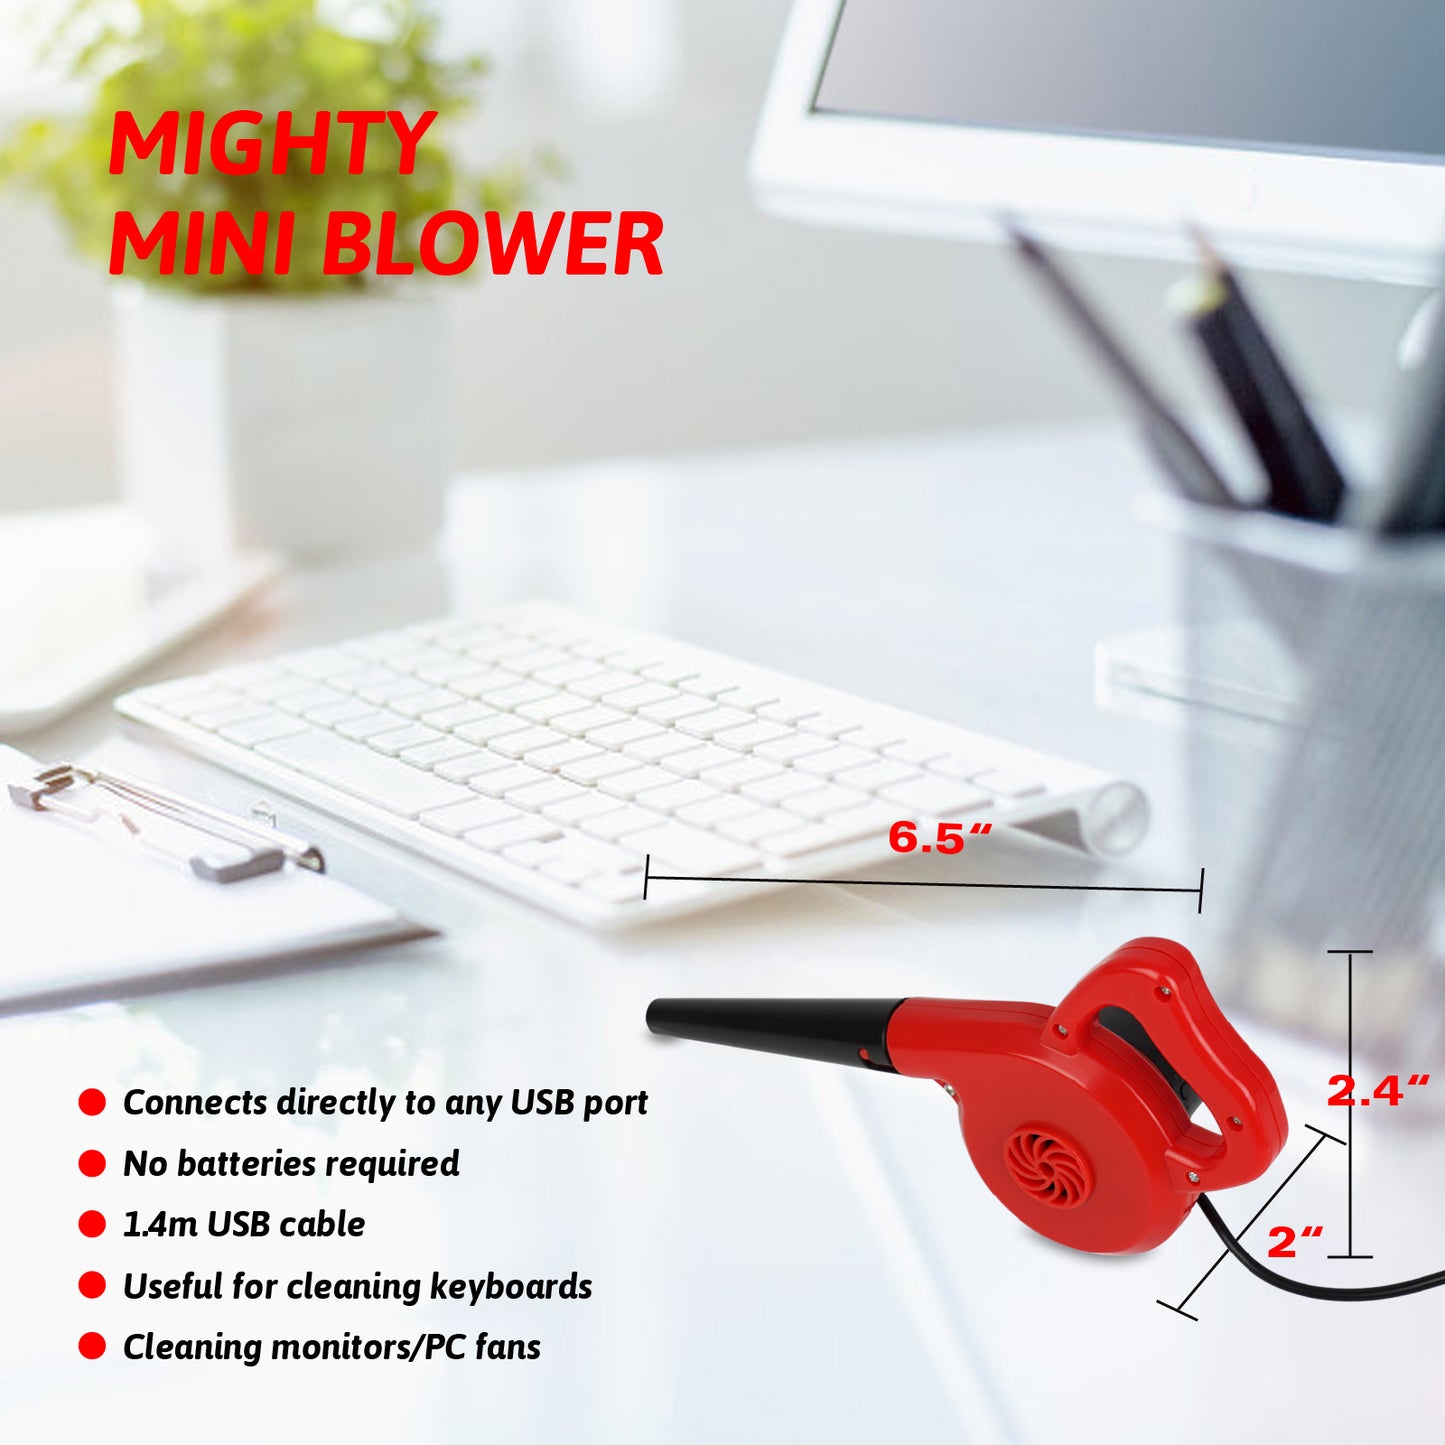 YOBRO Mighty Mini Blower WSG3980